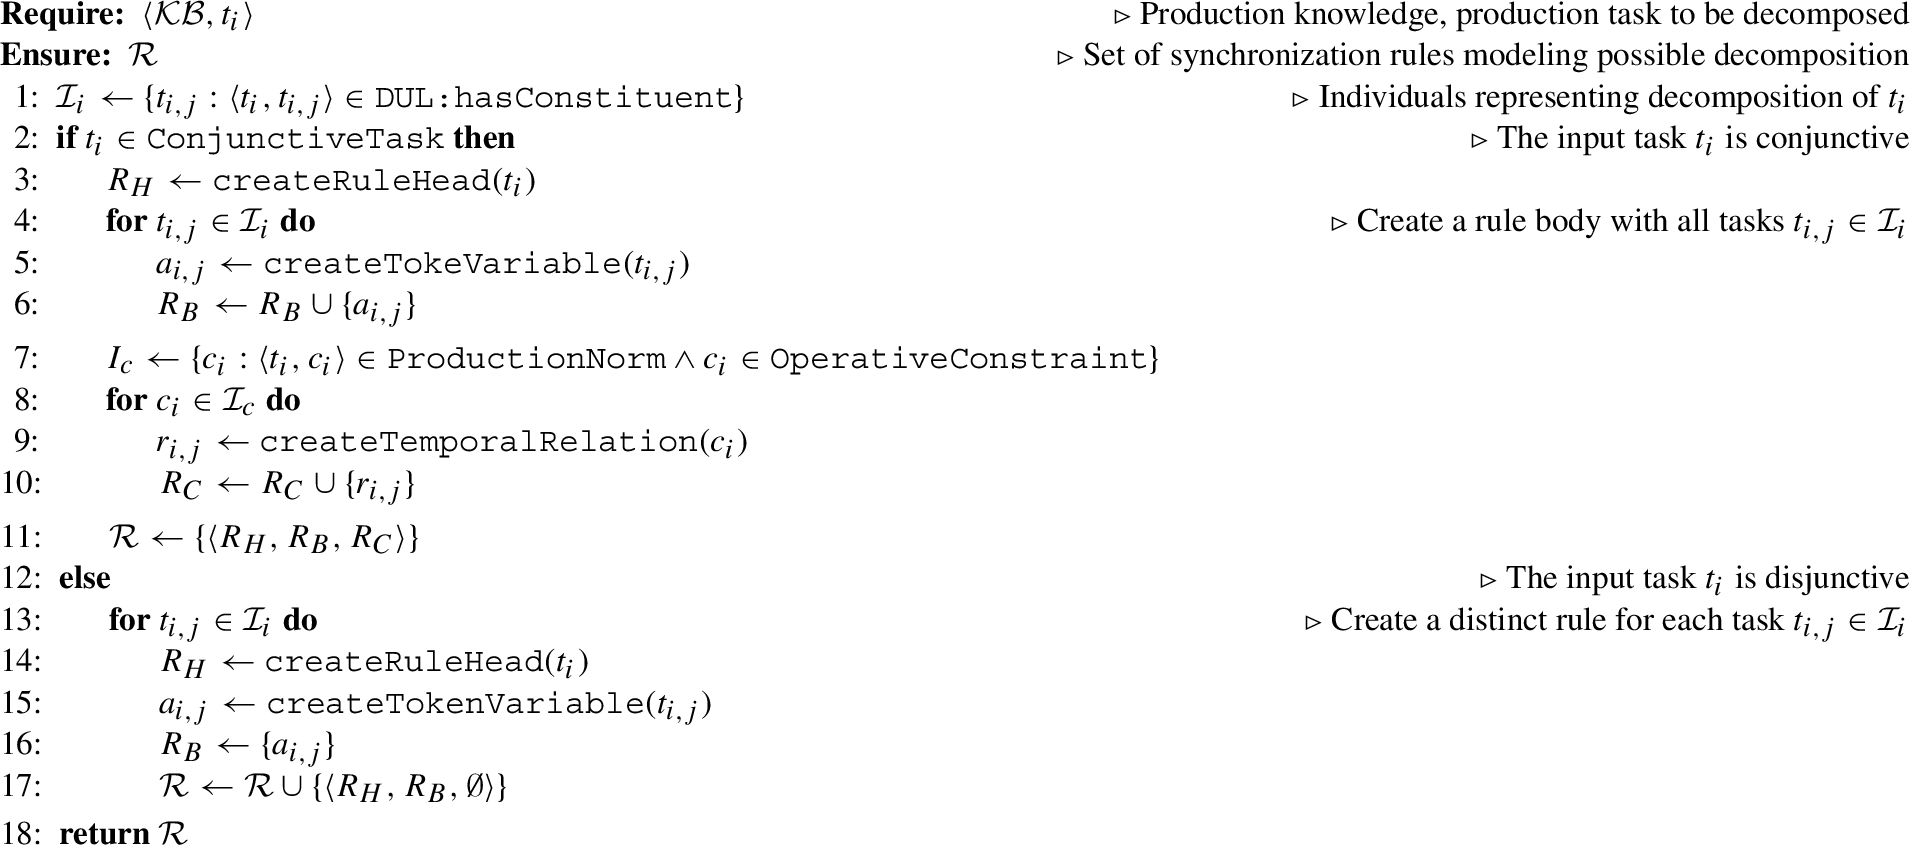 createDecompositionRule: definition of synchronization rules decomposing an input task